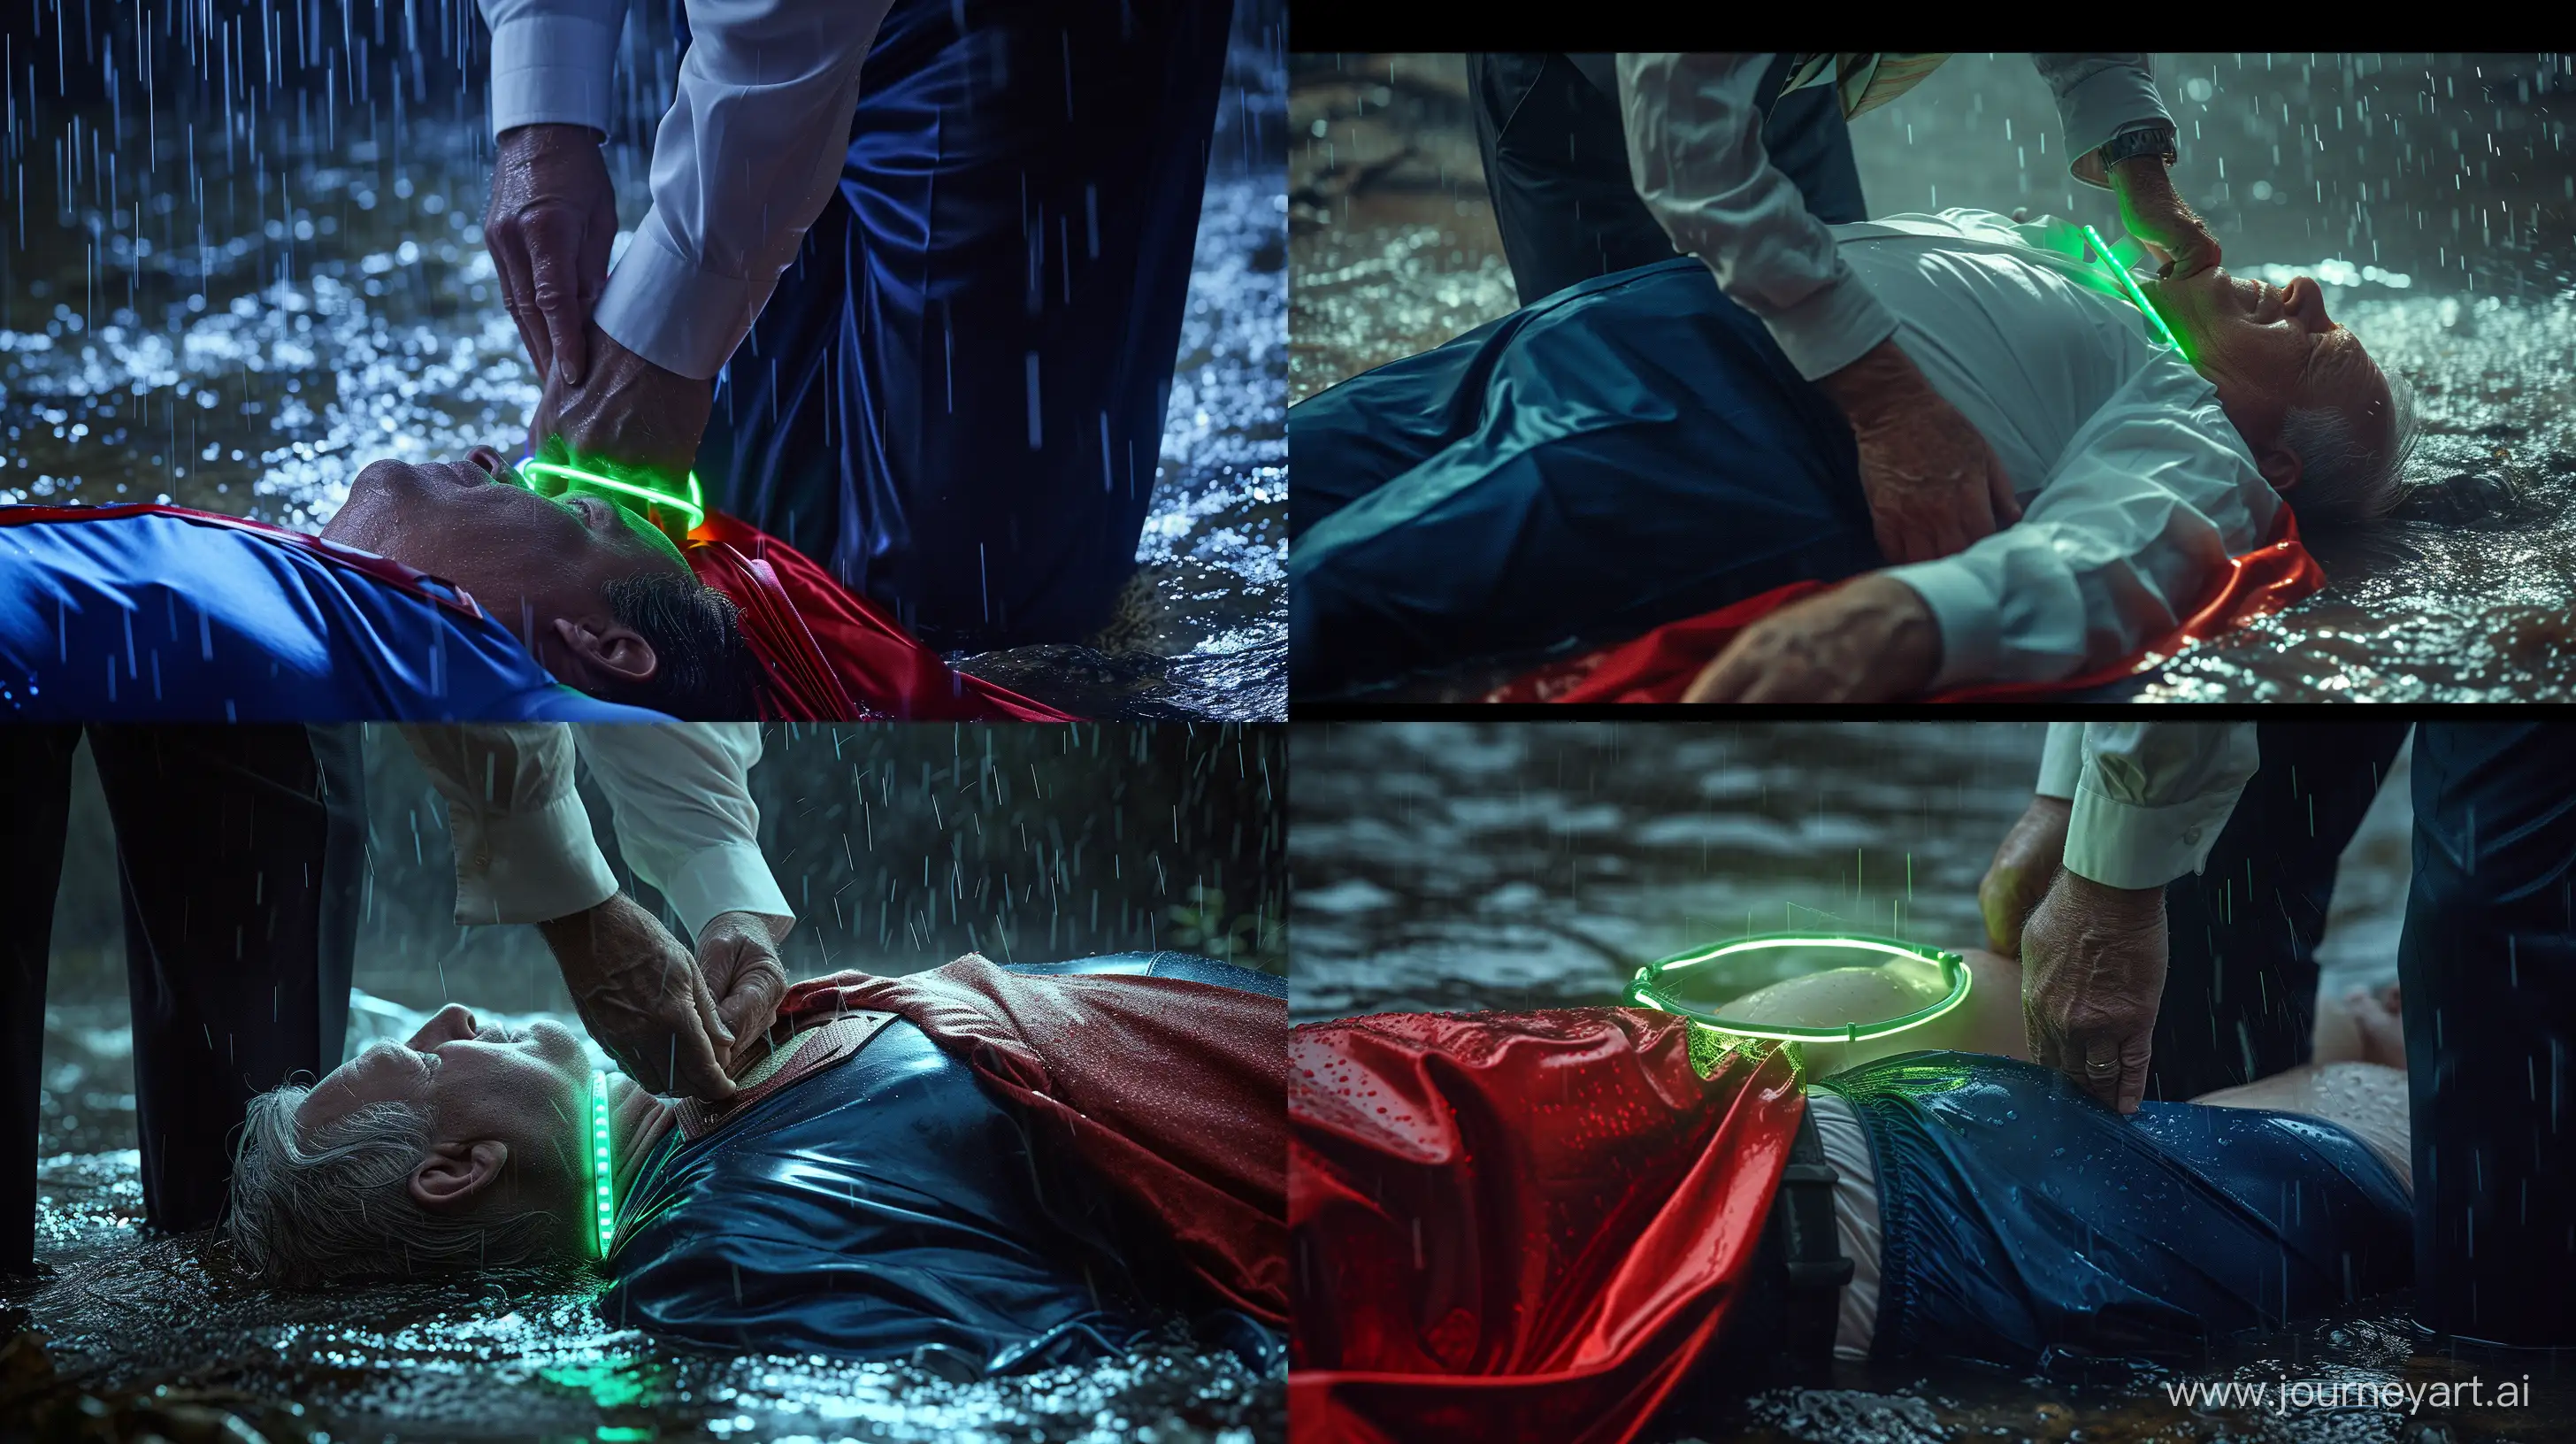 Elderly-Superman-Adjusts-Glowing-Dog-Collar-in-Rain-by-River